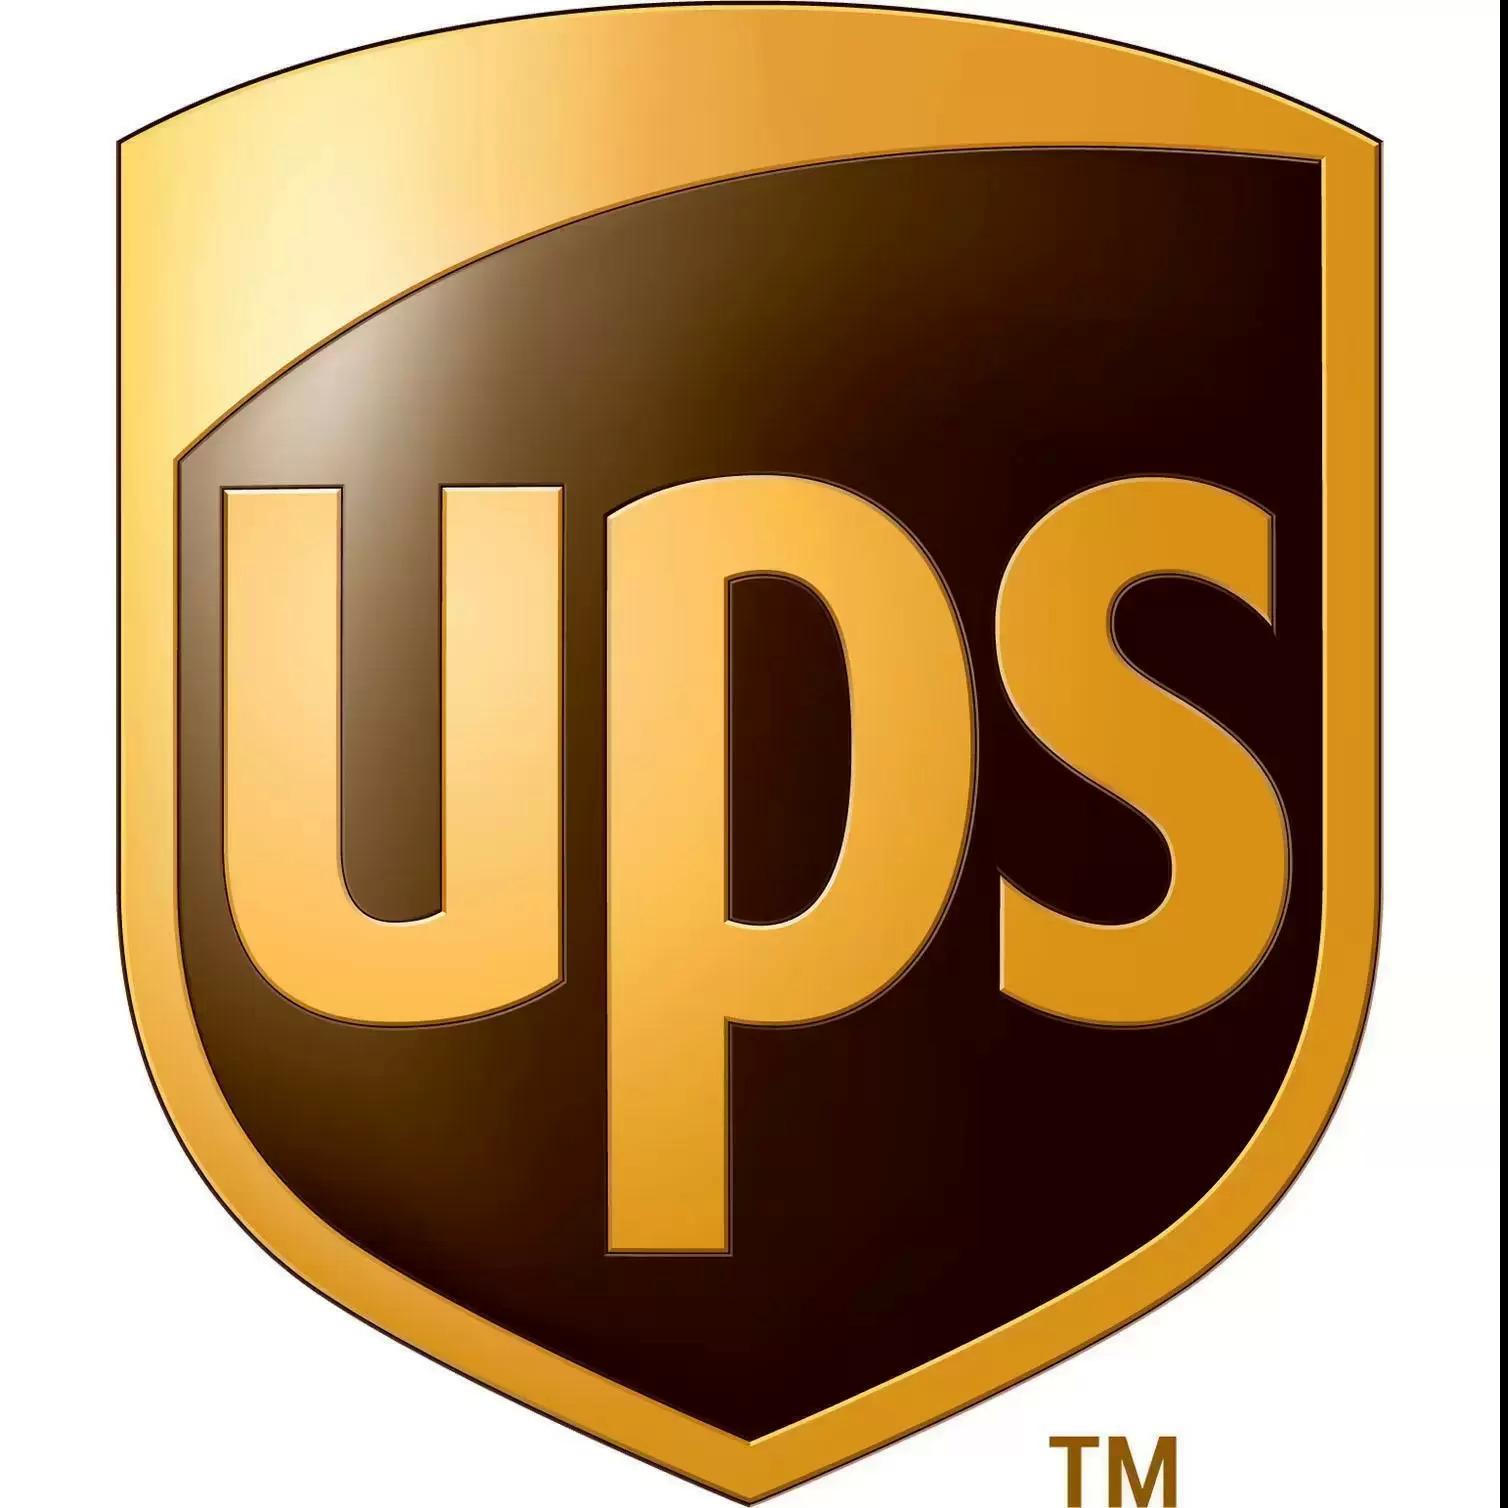 UPS My Choice Premium 1-Year Membership for $14.99